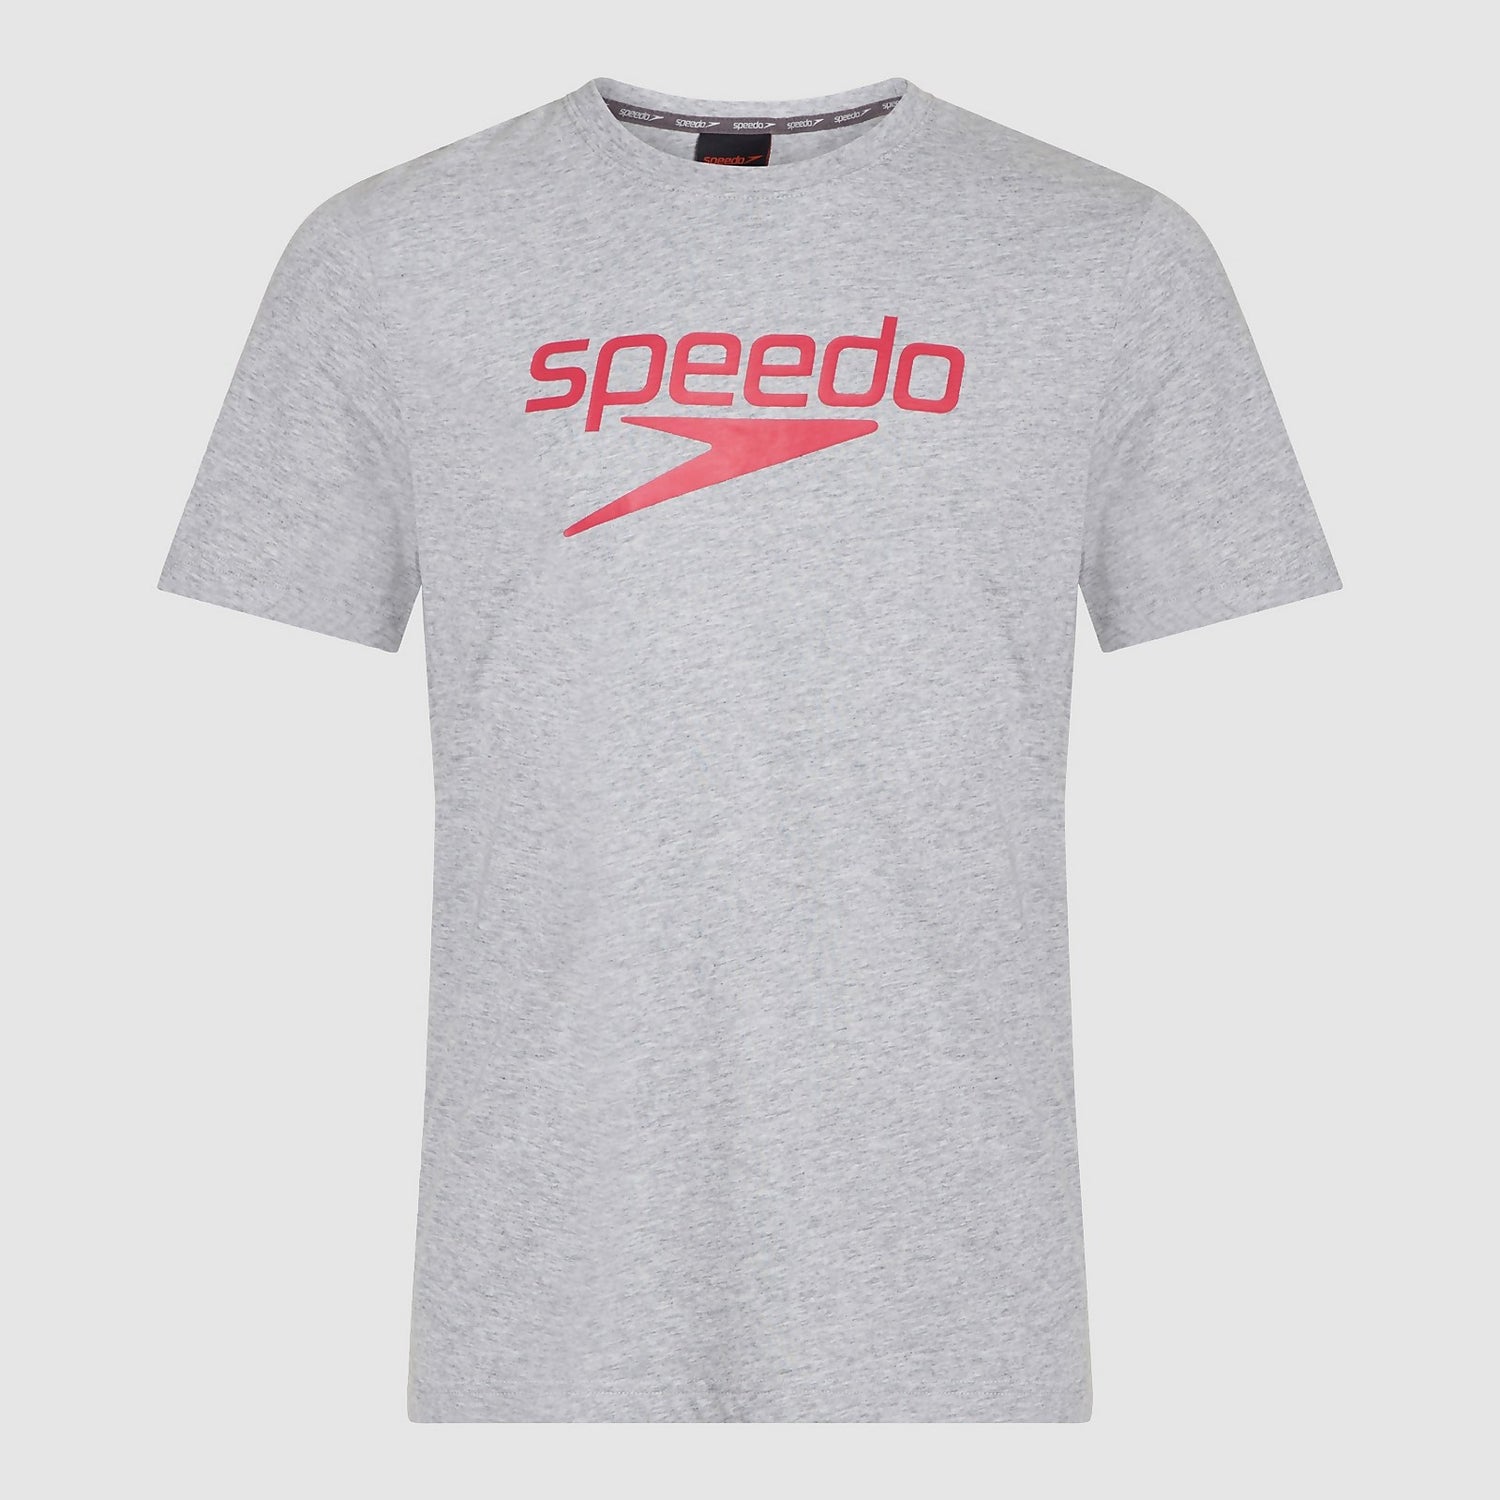 Speedo The Original T-Shirt 